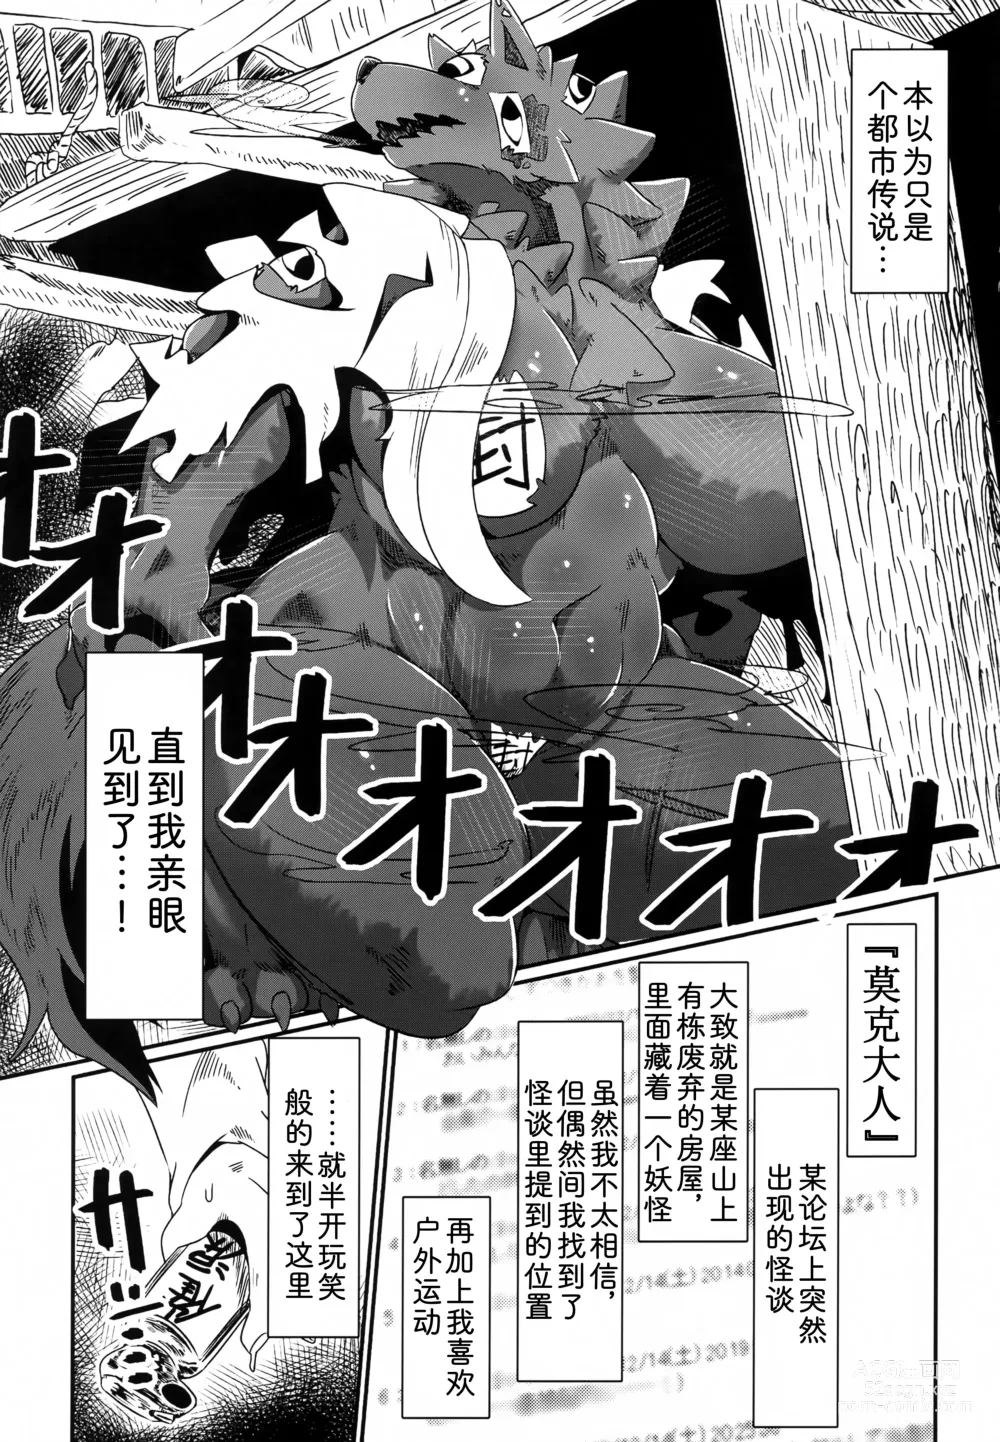 Page 4 of doujinshi 风鬟雾鬓，醉生梦死